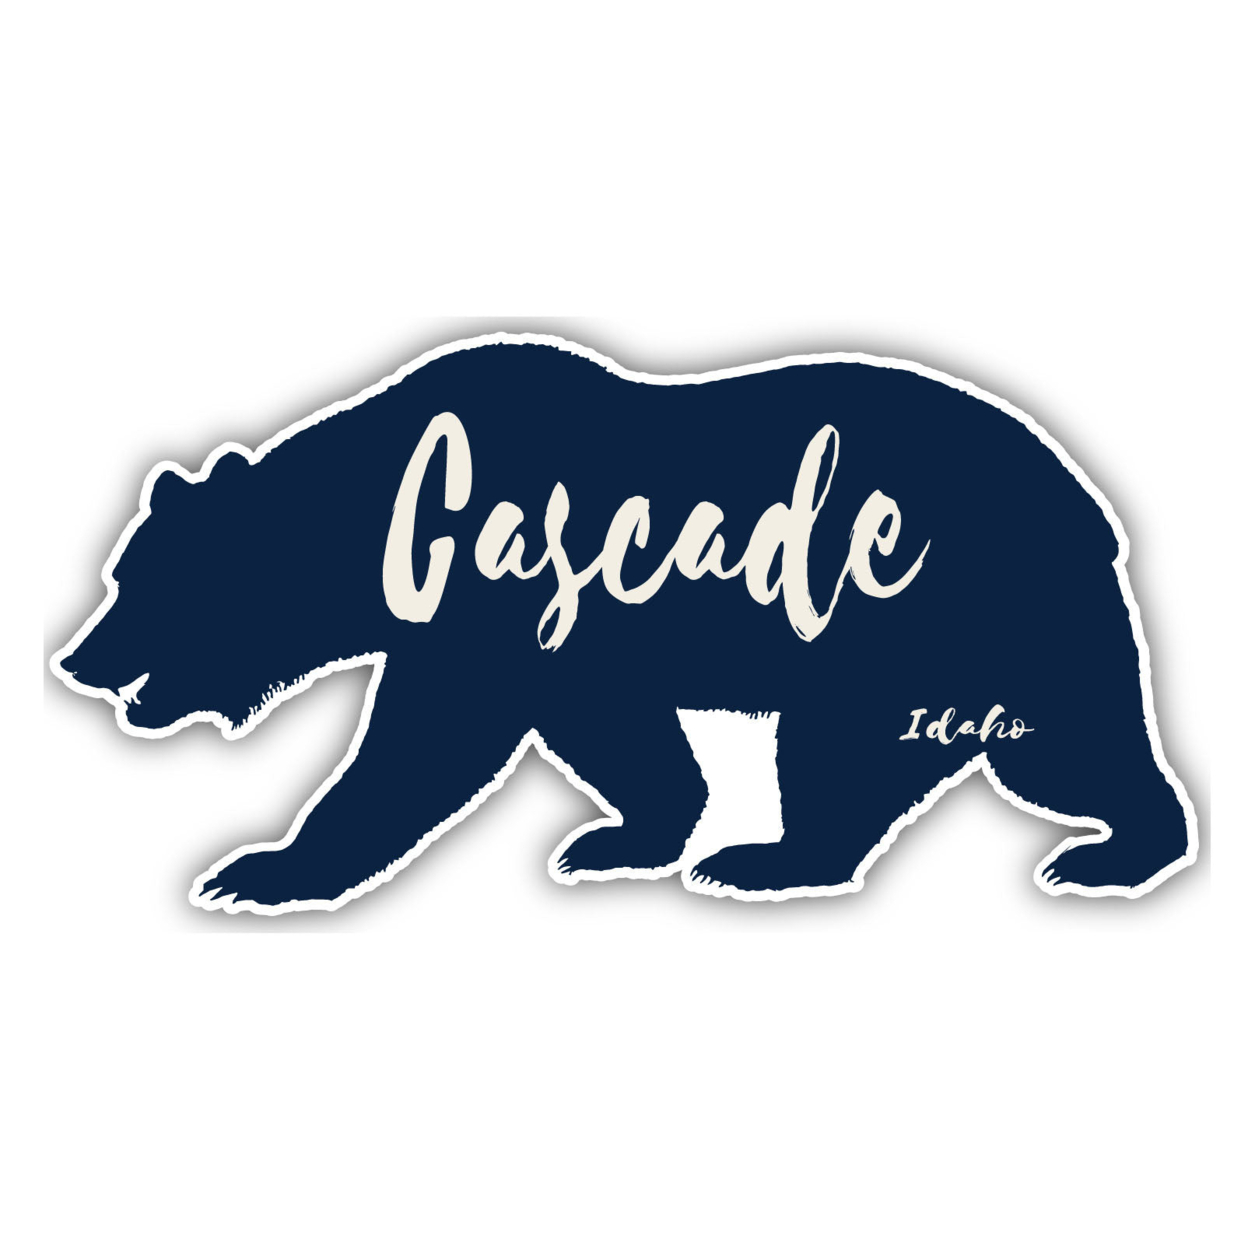 Cascade Idaho Souvenir Decorative Stickers (Choose Theme And Size) - Single Unit, 2-Inch, Bear